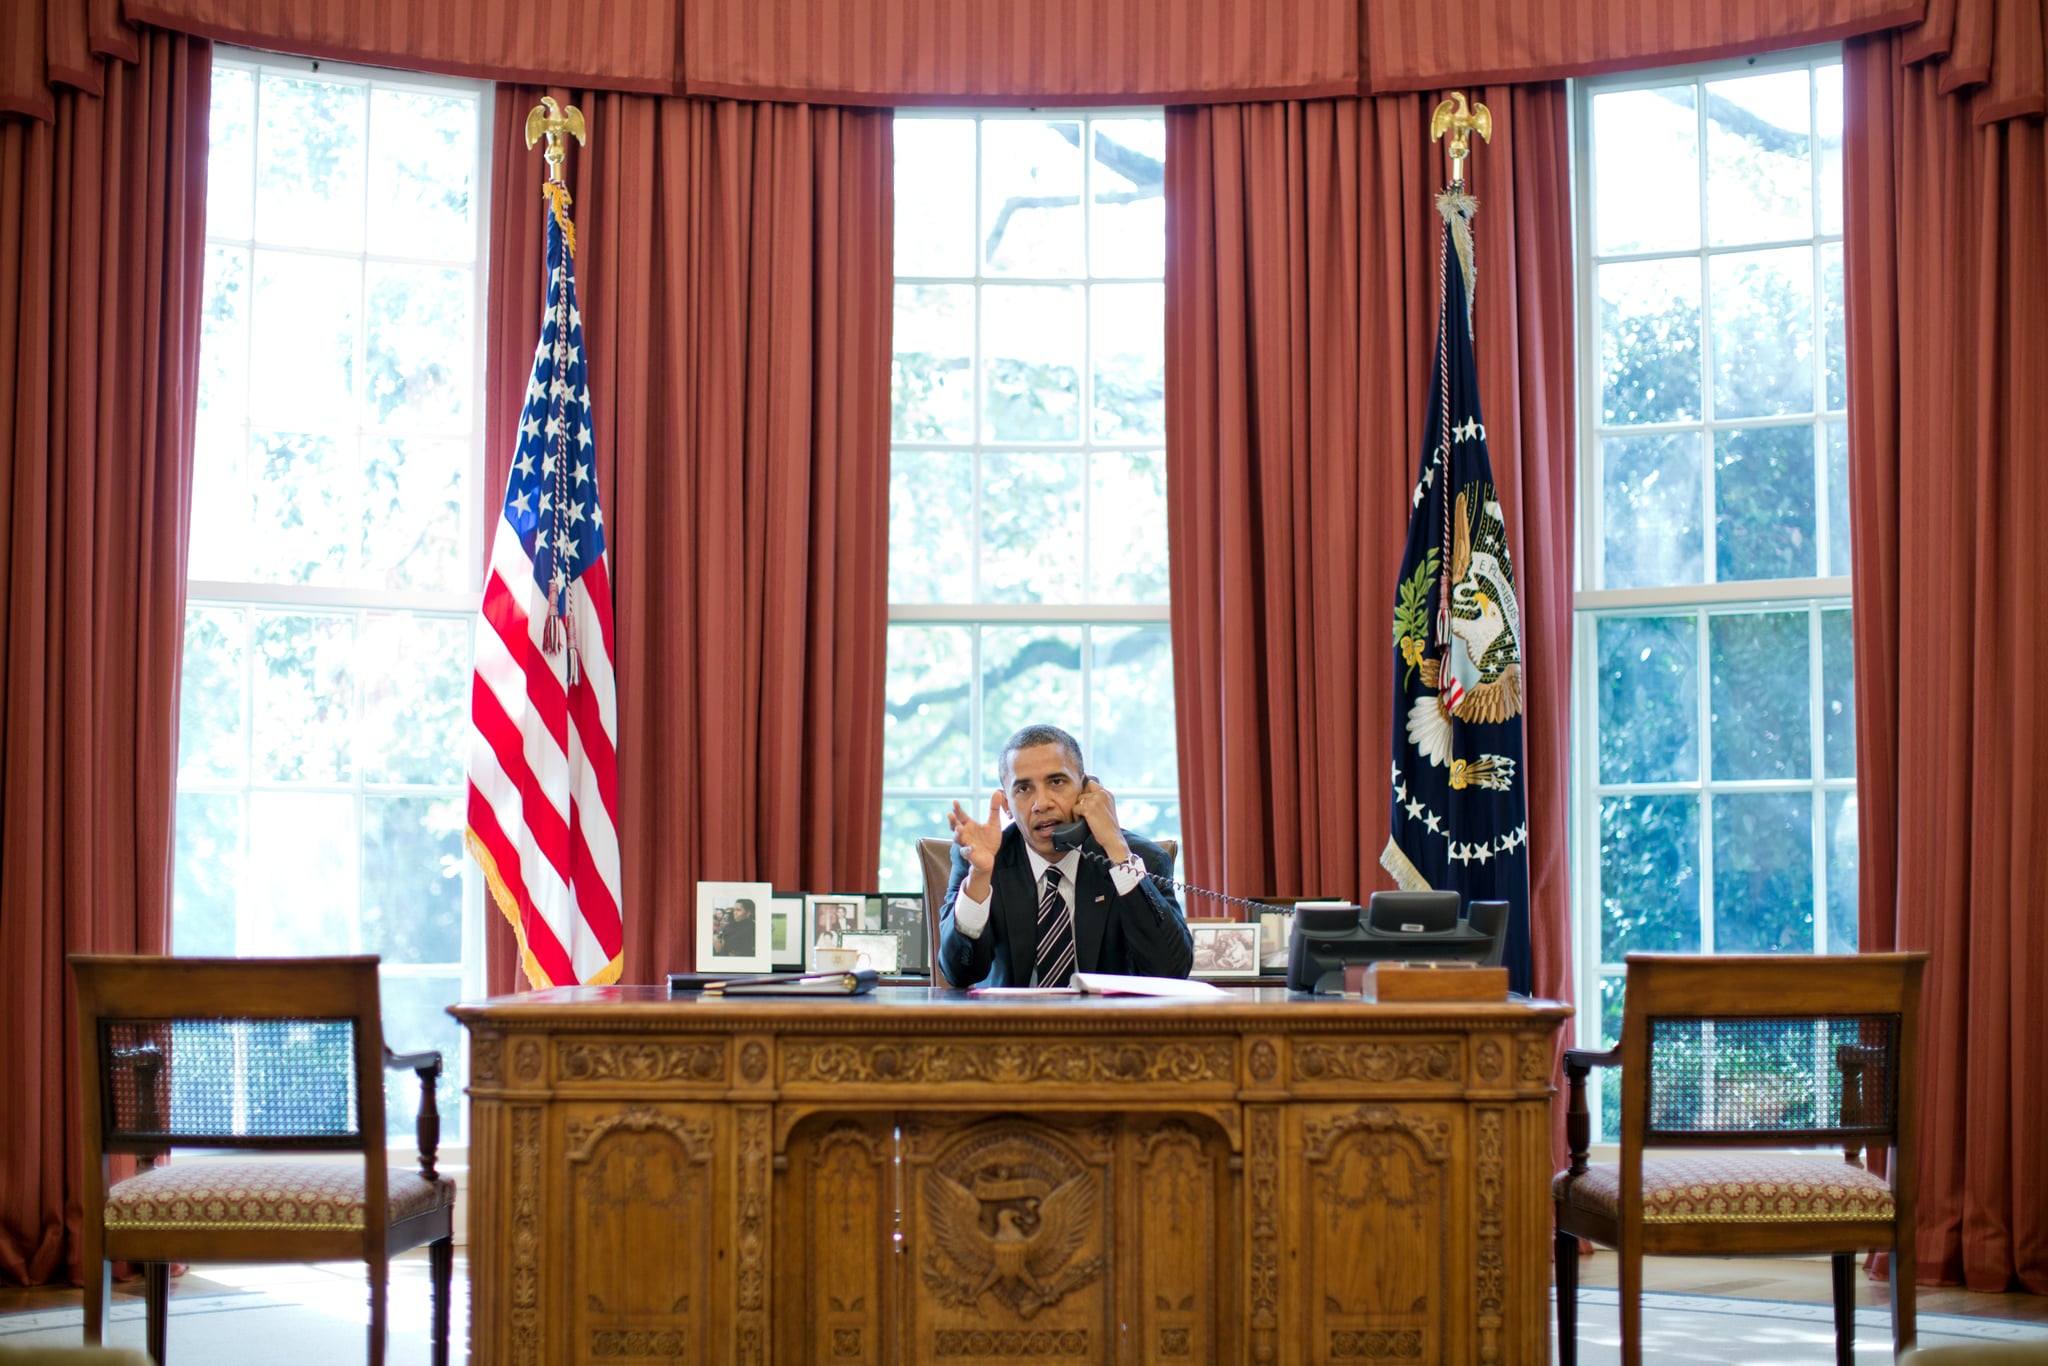 Obama's Oval Office - TODAY.com